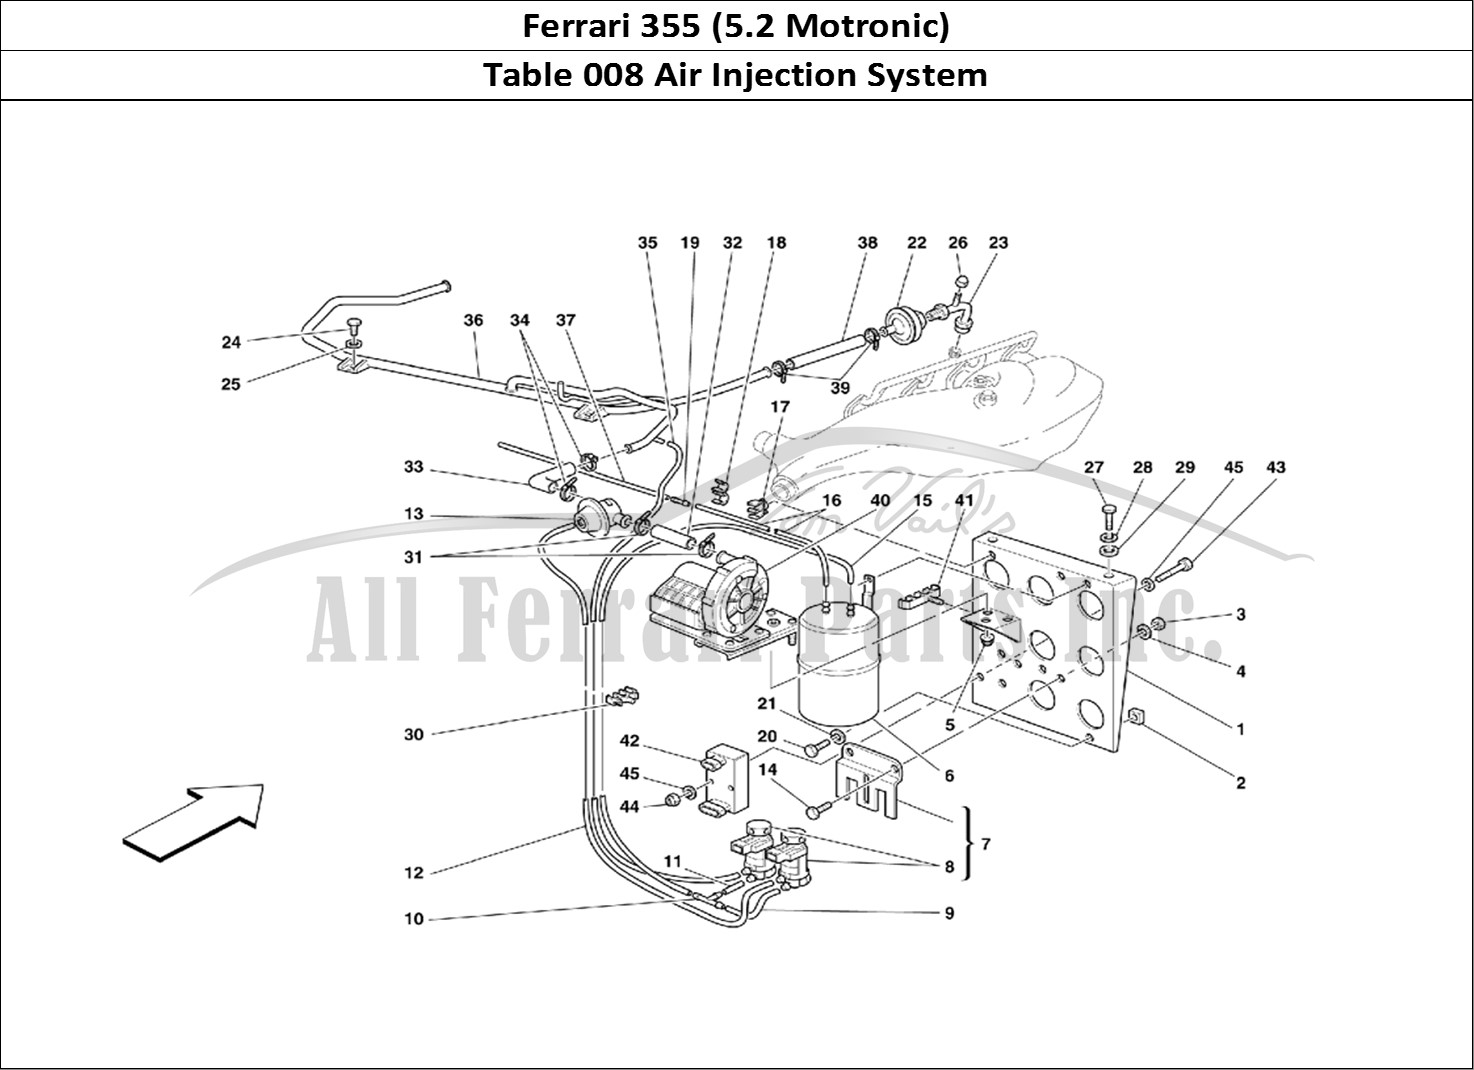 Ferrari Parts Ferrari 355 (5.2 Motronic) Page 008 Air Injection Device